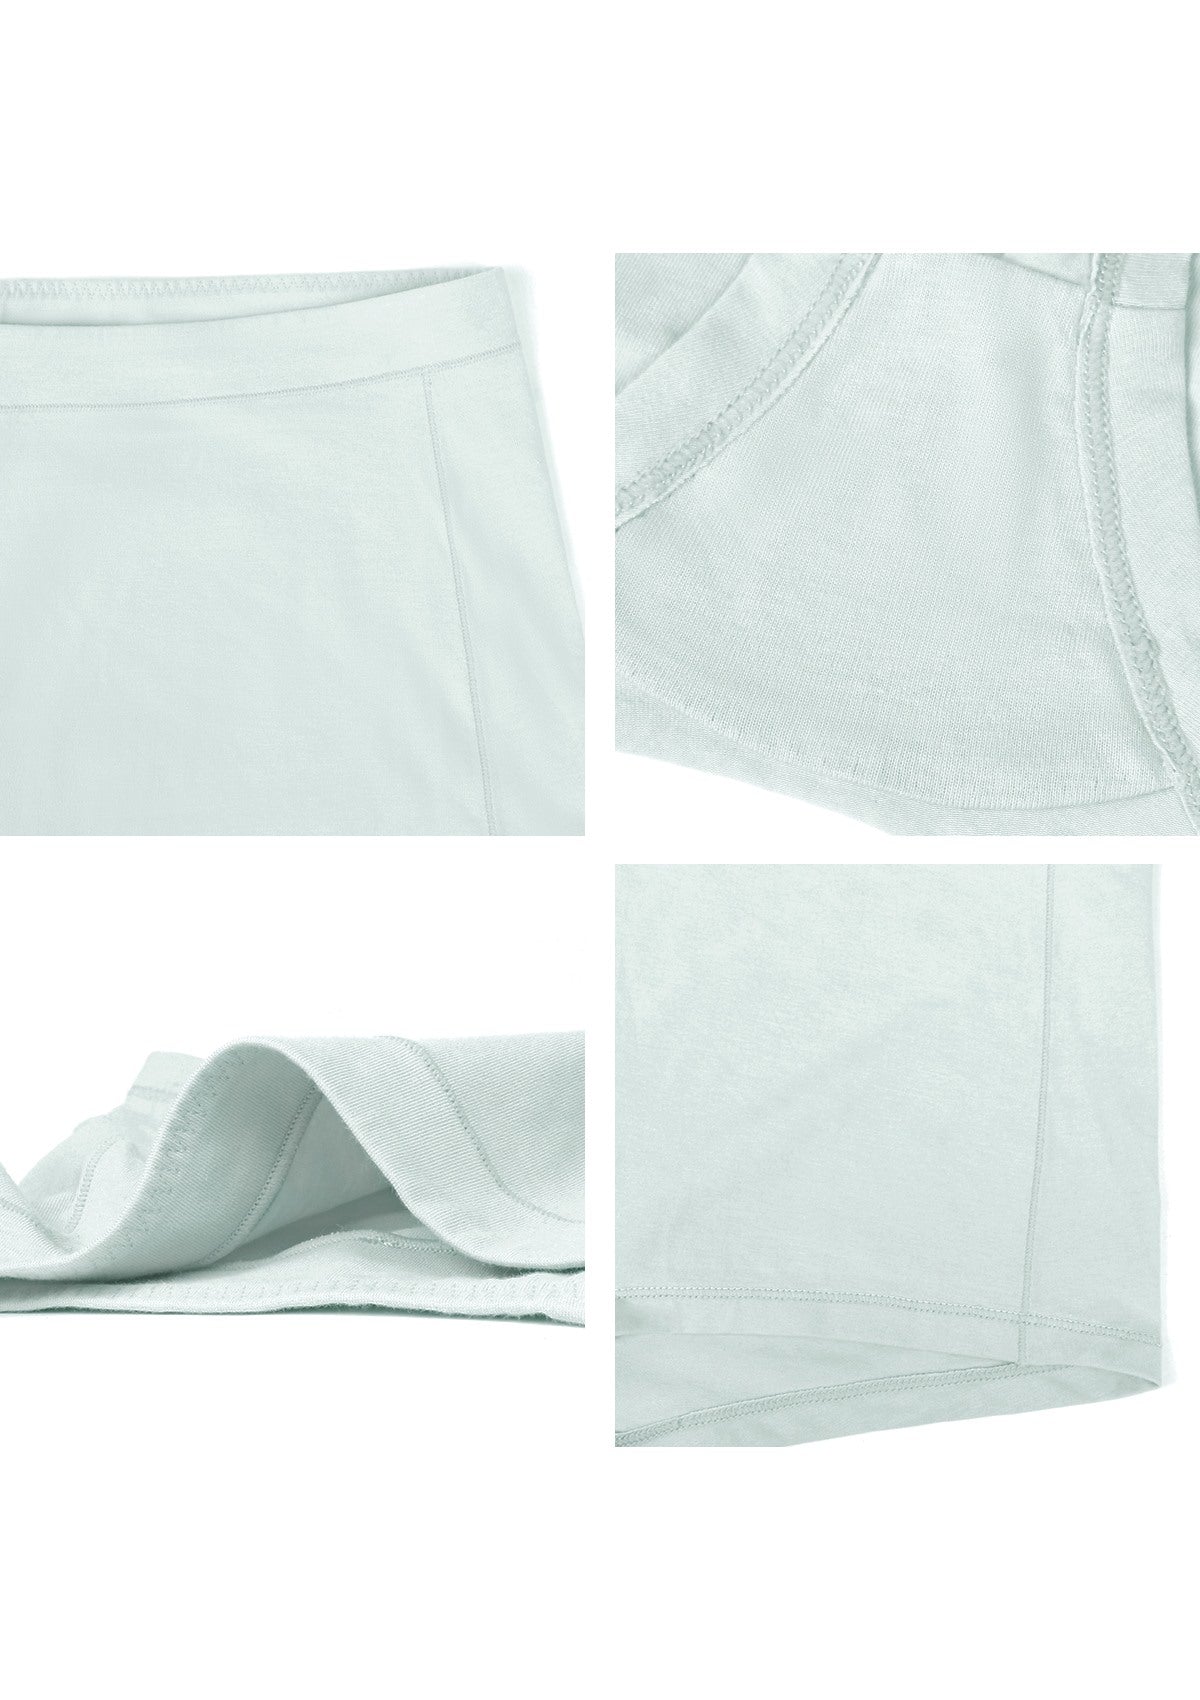 All-Day Comfort Mid-Rise Cotton Boyshorts Underwear 3 Pack - XL / Black+Beige+Green